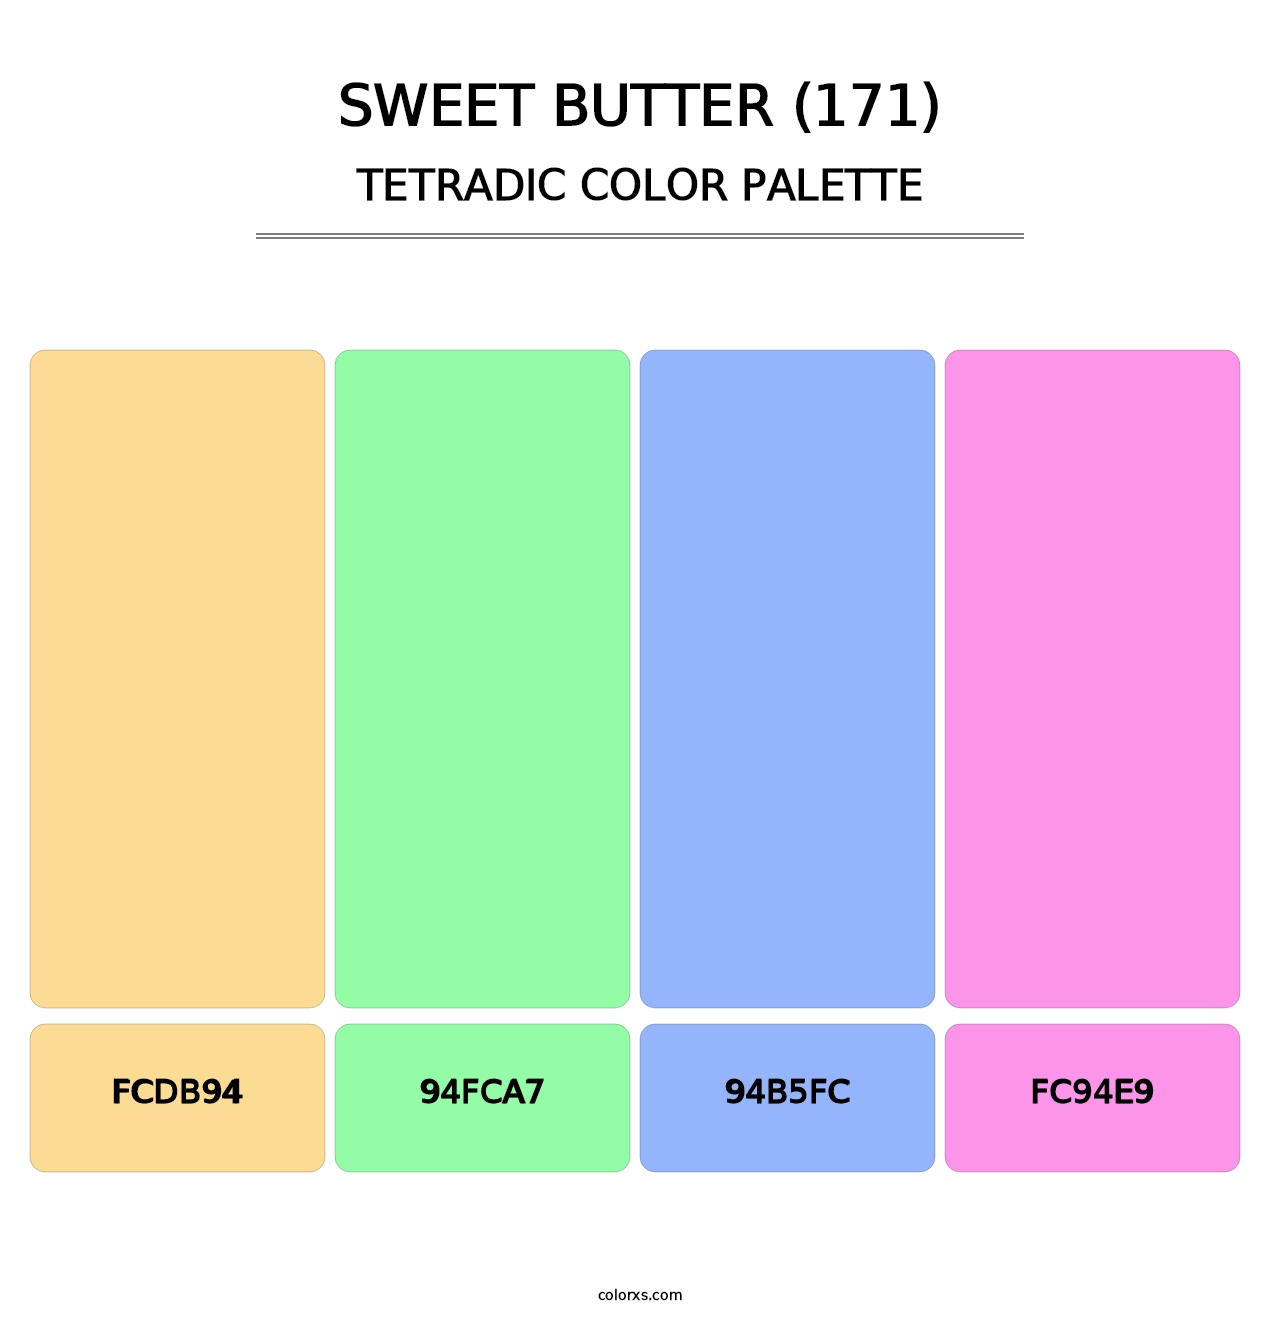 Sweet Butter (171) - Tetradic Color Palette